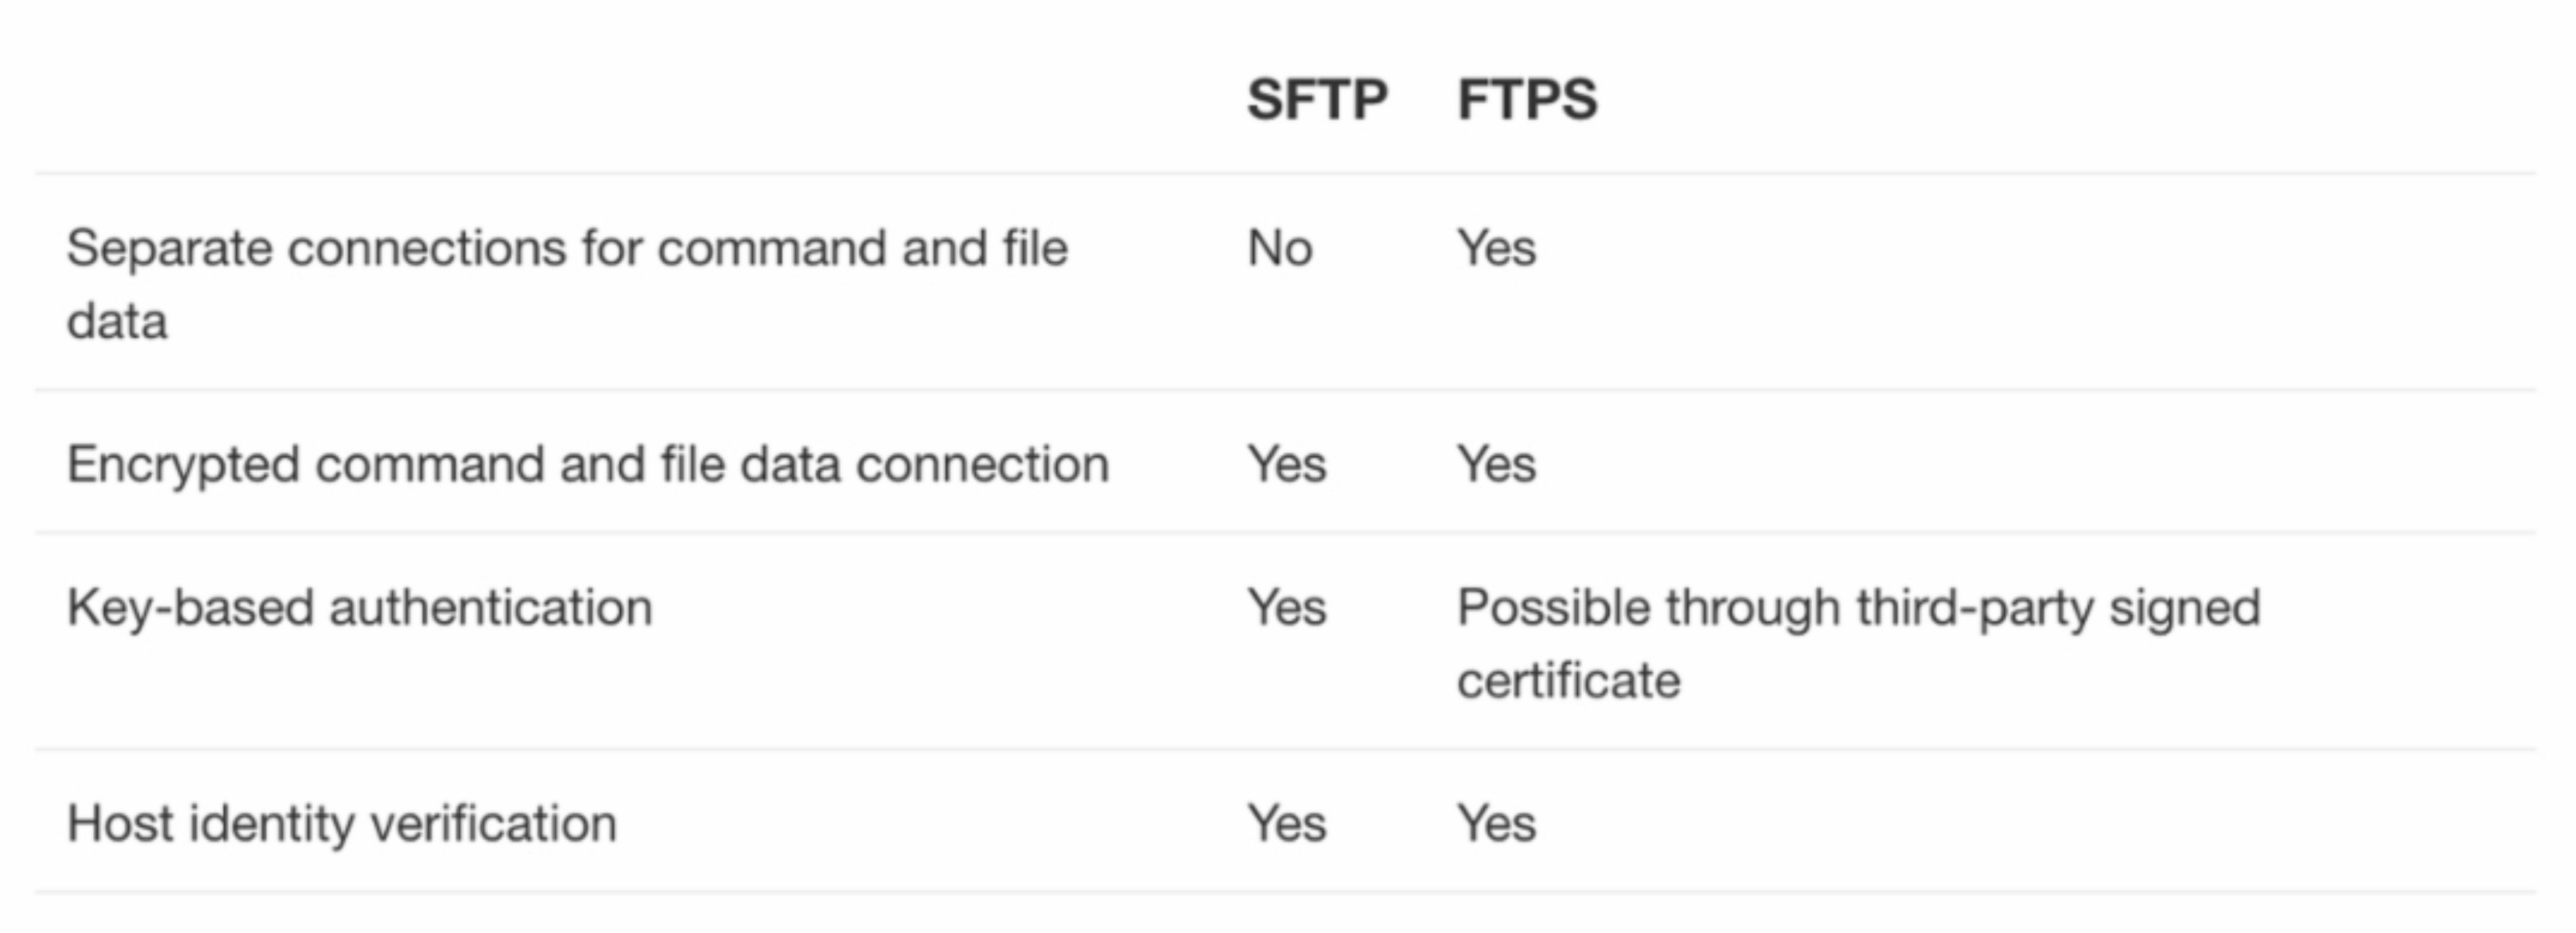 Table comparing SFTP vs FTPS